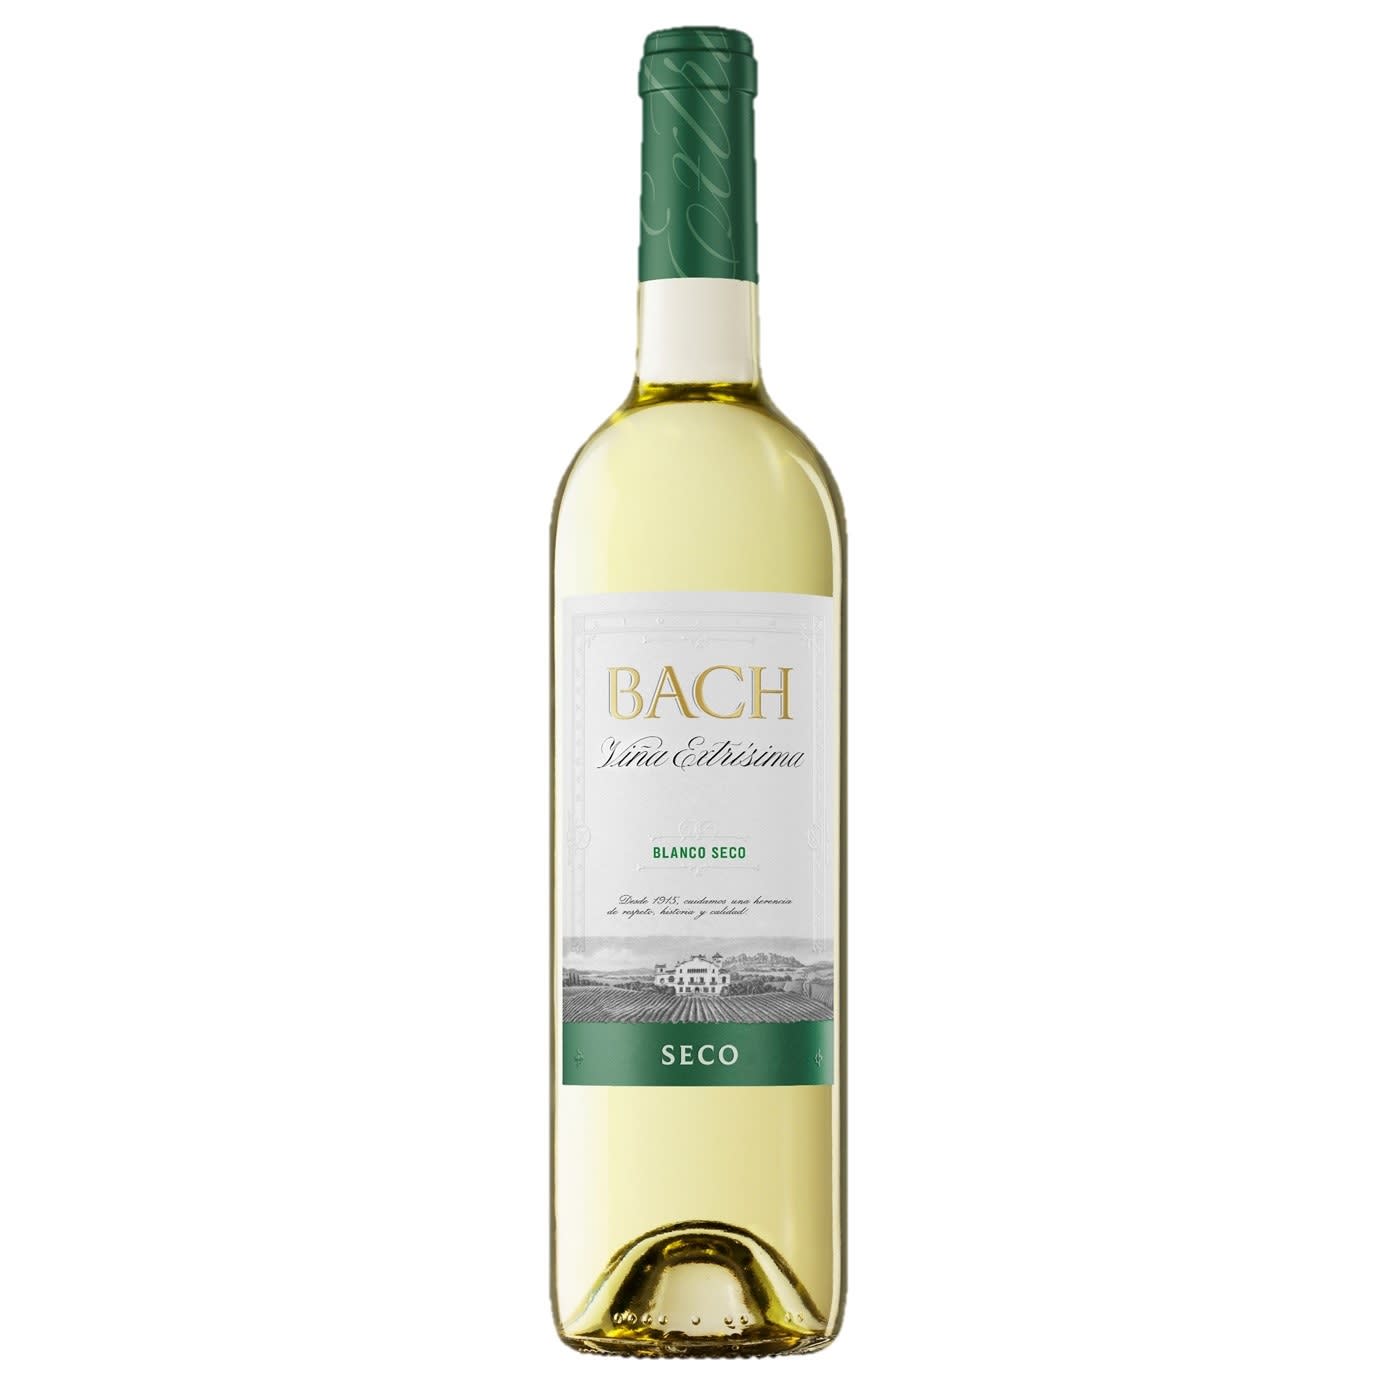 Bach Vina Extrisima Seco Blanco Spanish White Wine 750ml